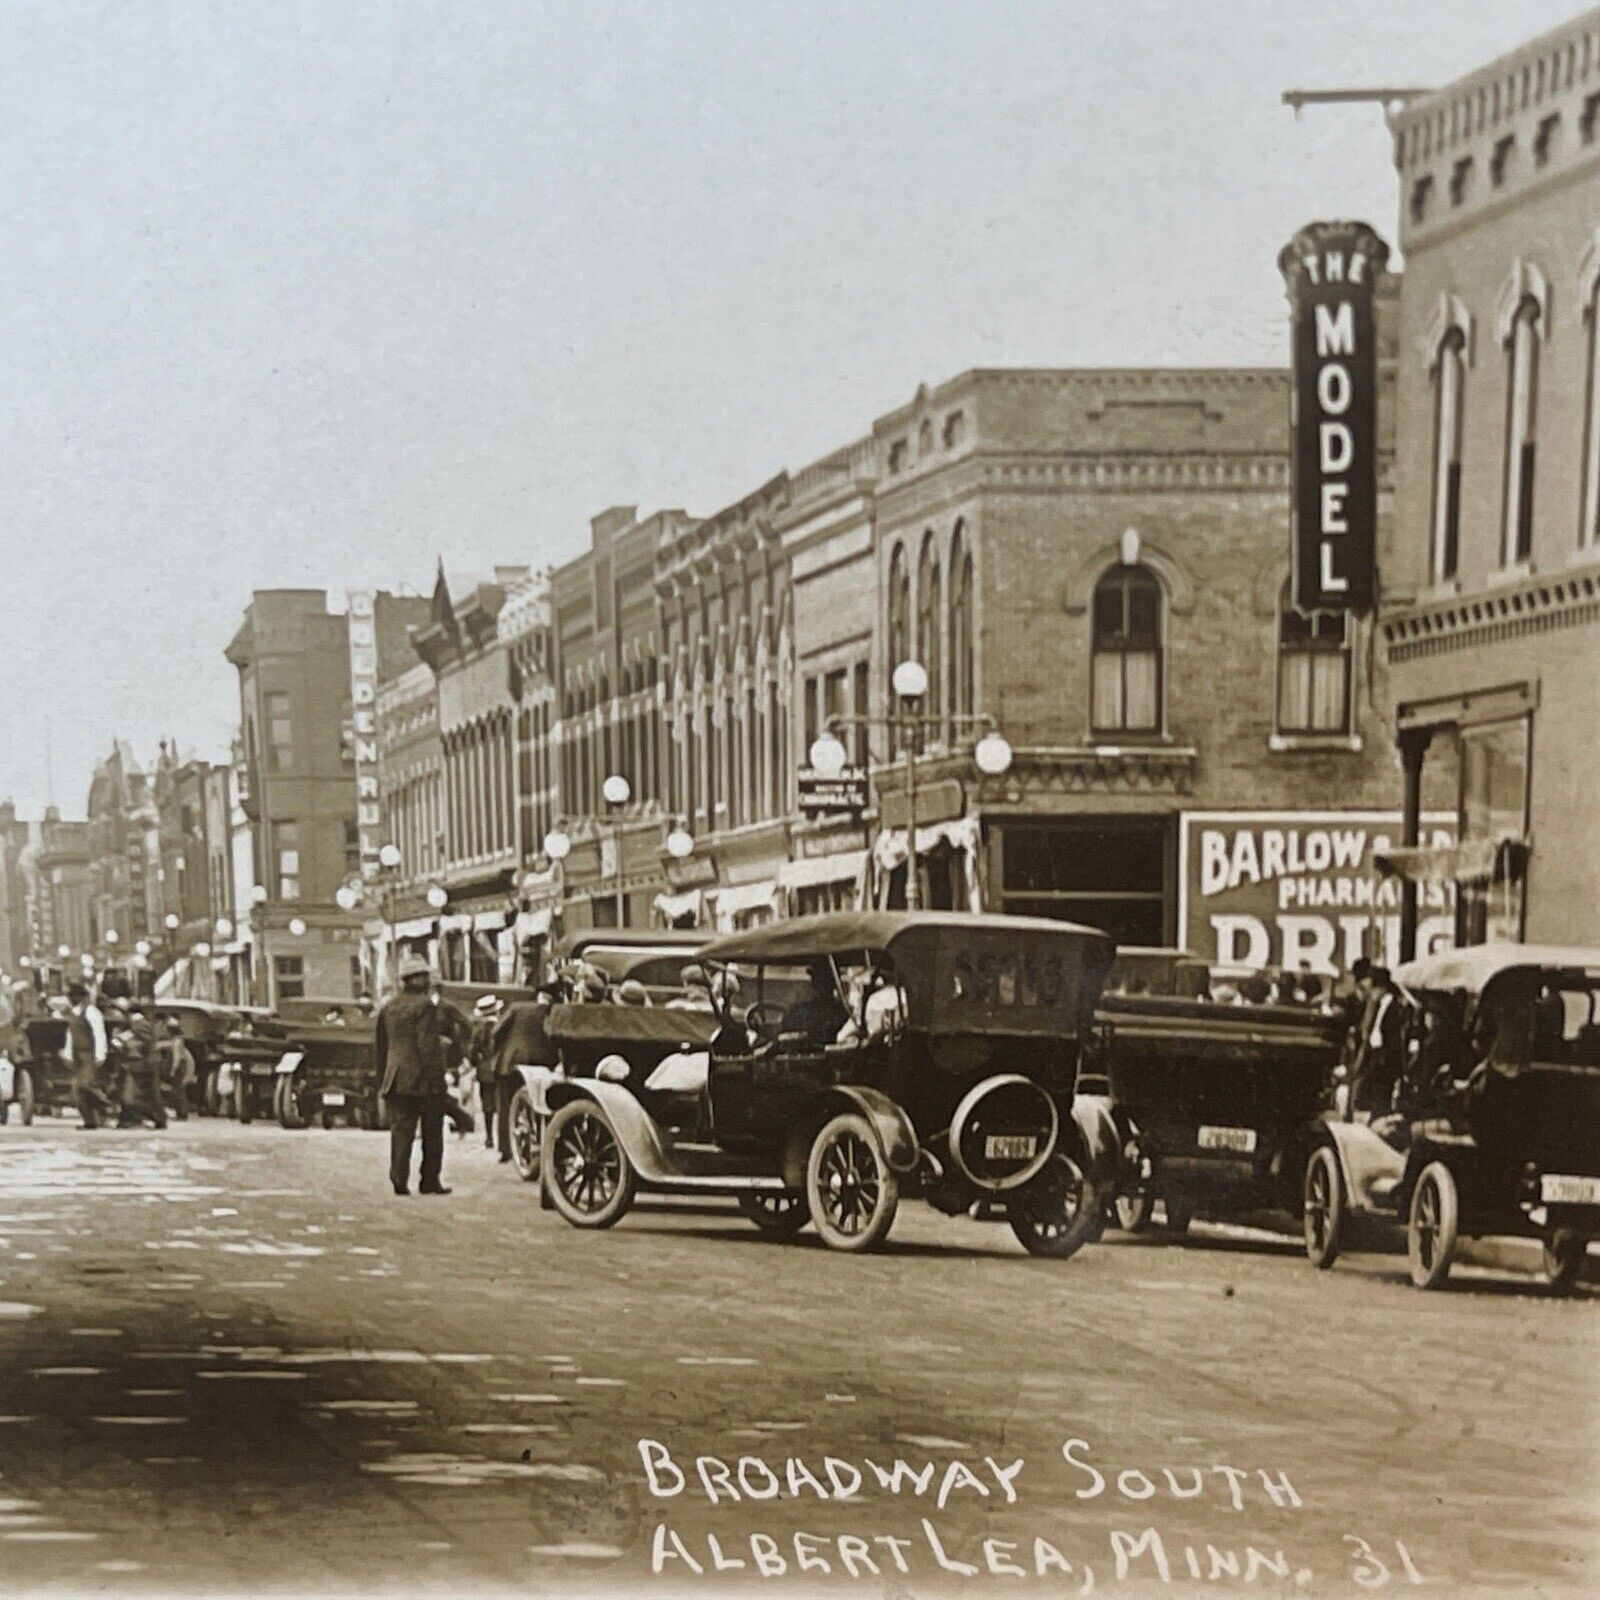 1916 real photo postcard of Broadway South Albert Lea Minnesota